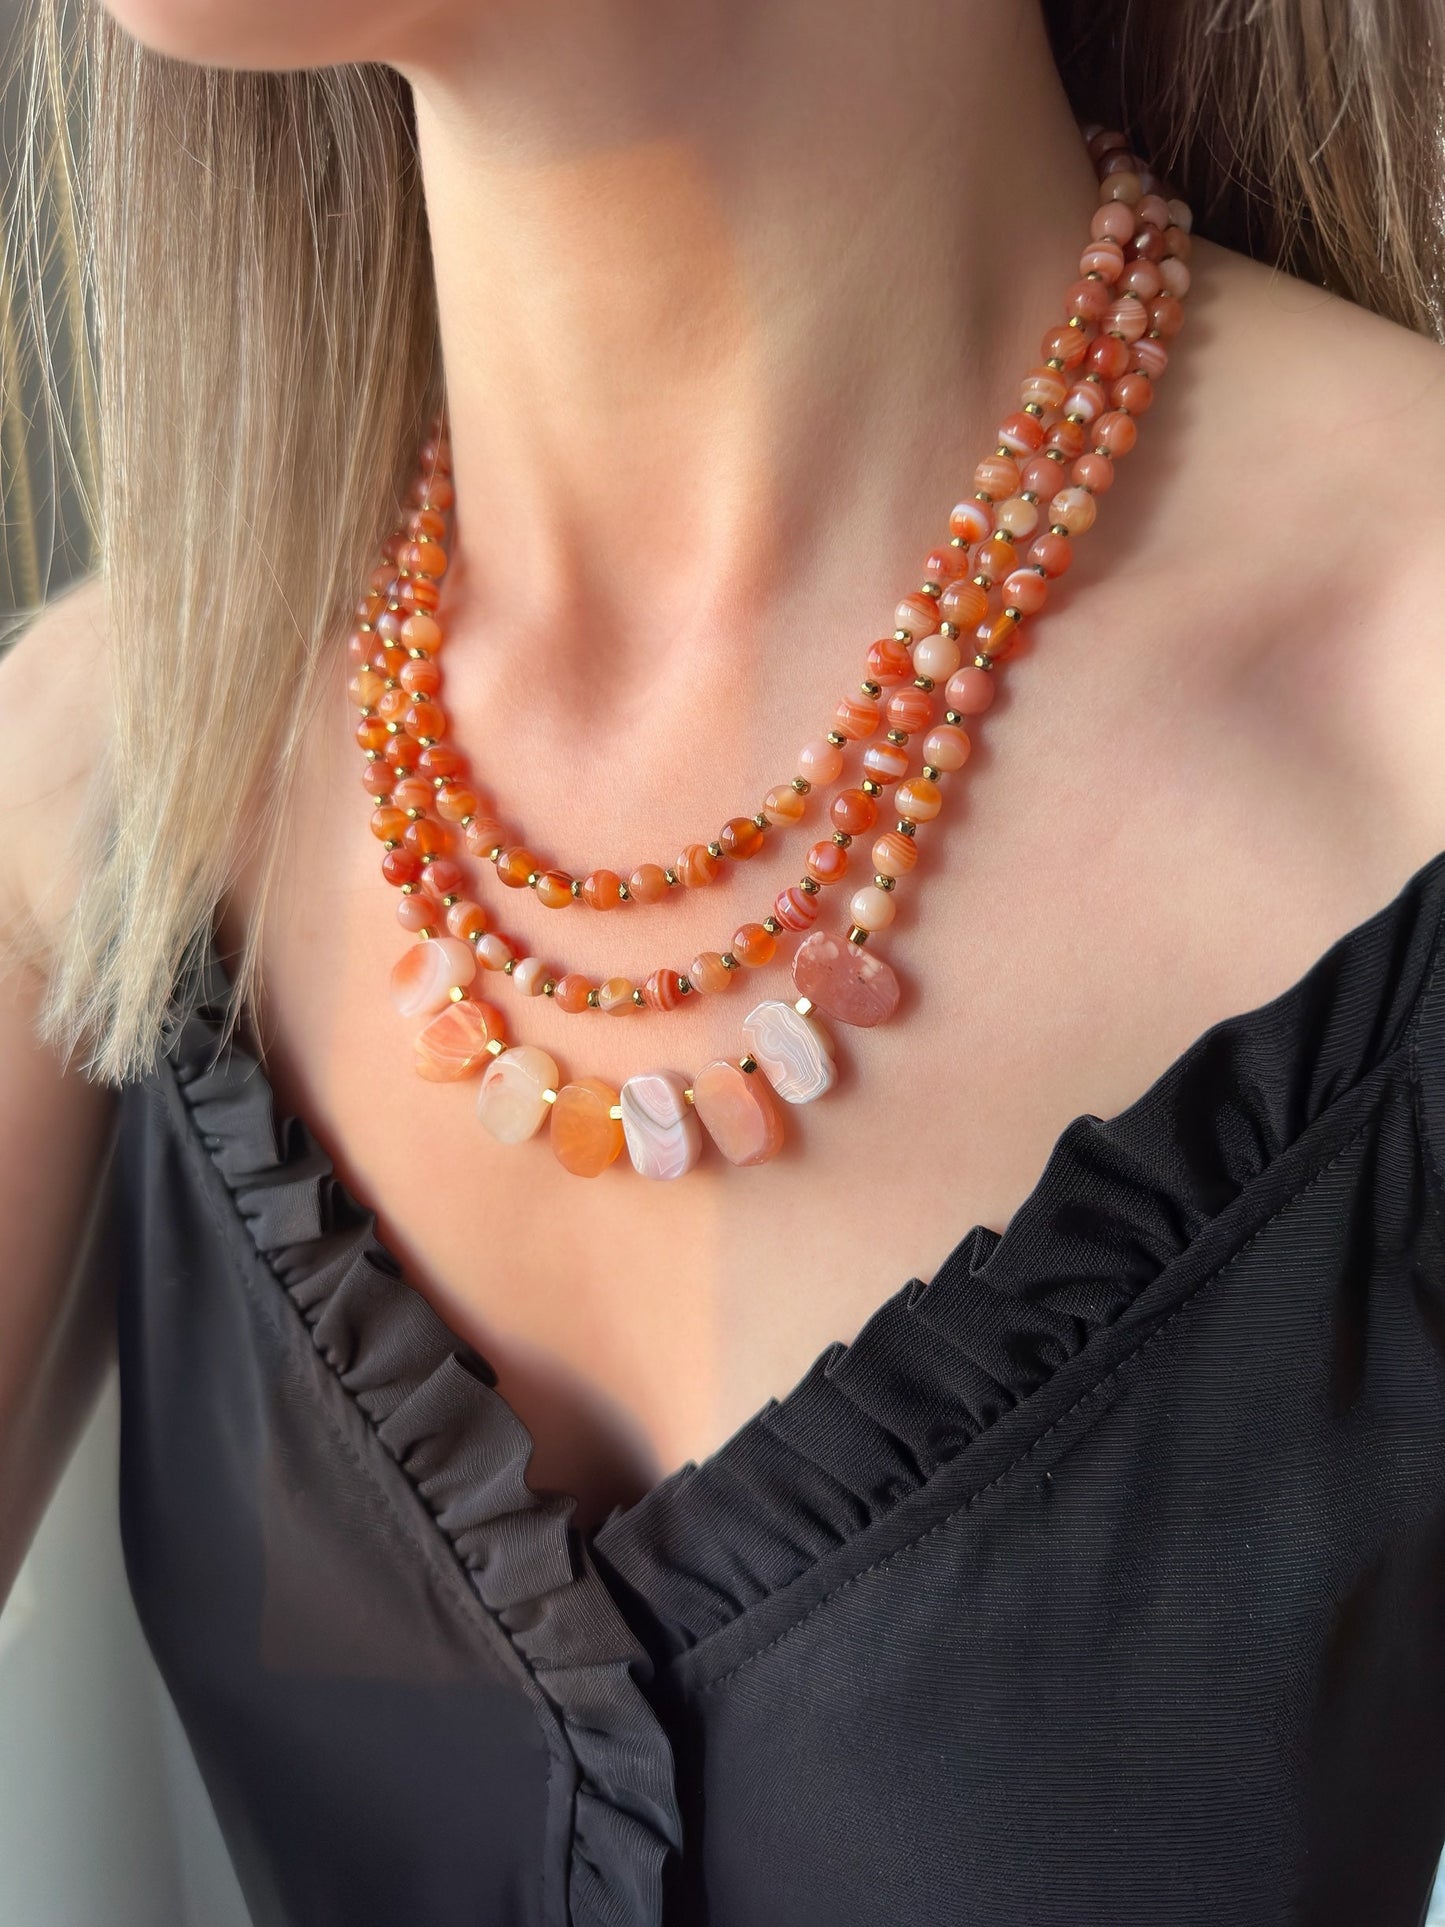 Gemstone Necklace, Multistrand Orange Agate Jewelry, Unique Minimalist Birthday Gift, Beaded Handmade Design